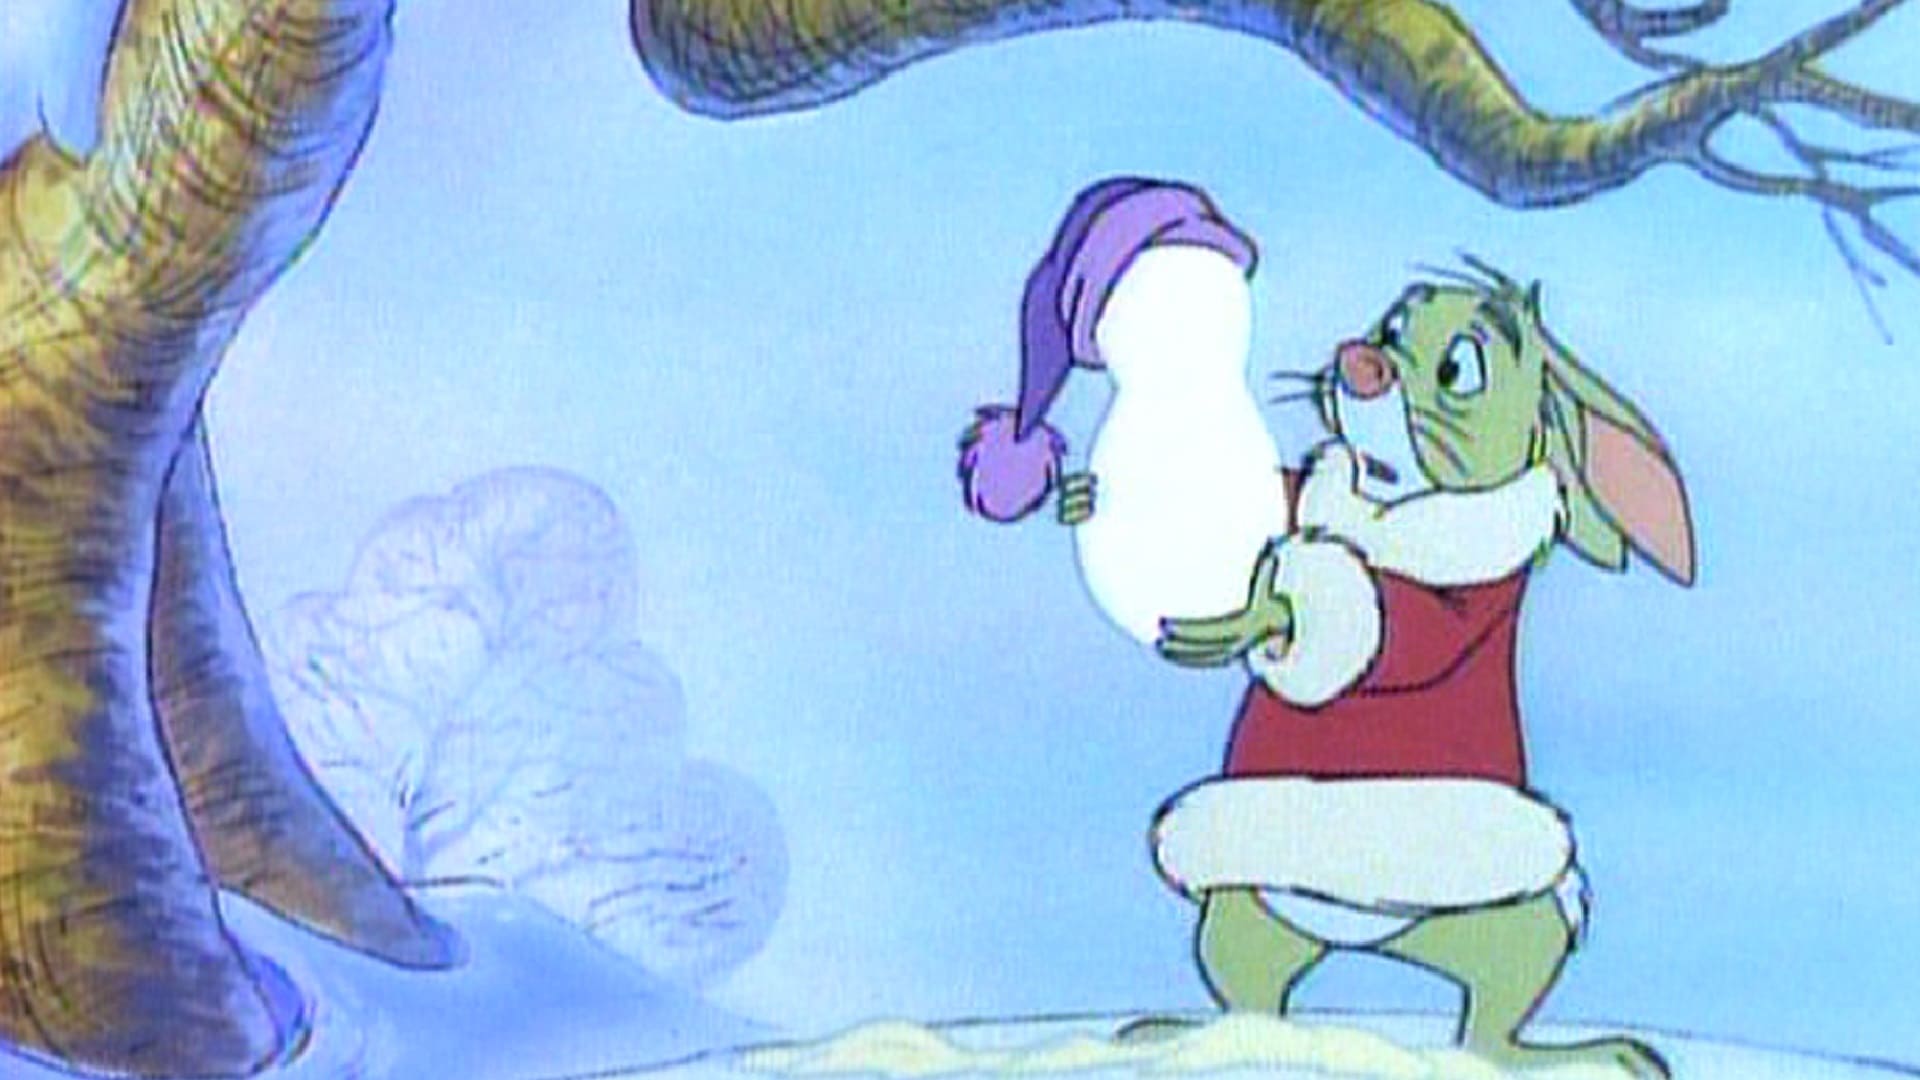 The New Adventures of Winnie the Pooh. Season 1, Episode 25: "Groundpiglet Day." 1988-1991. Walt Disney Television Animation.